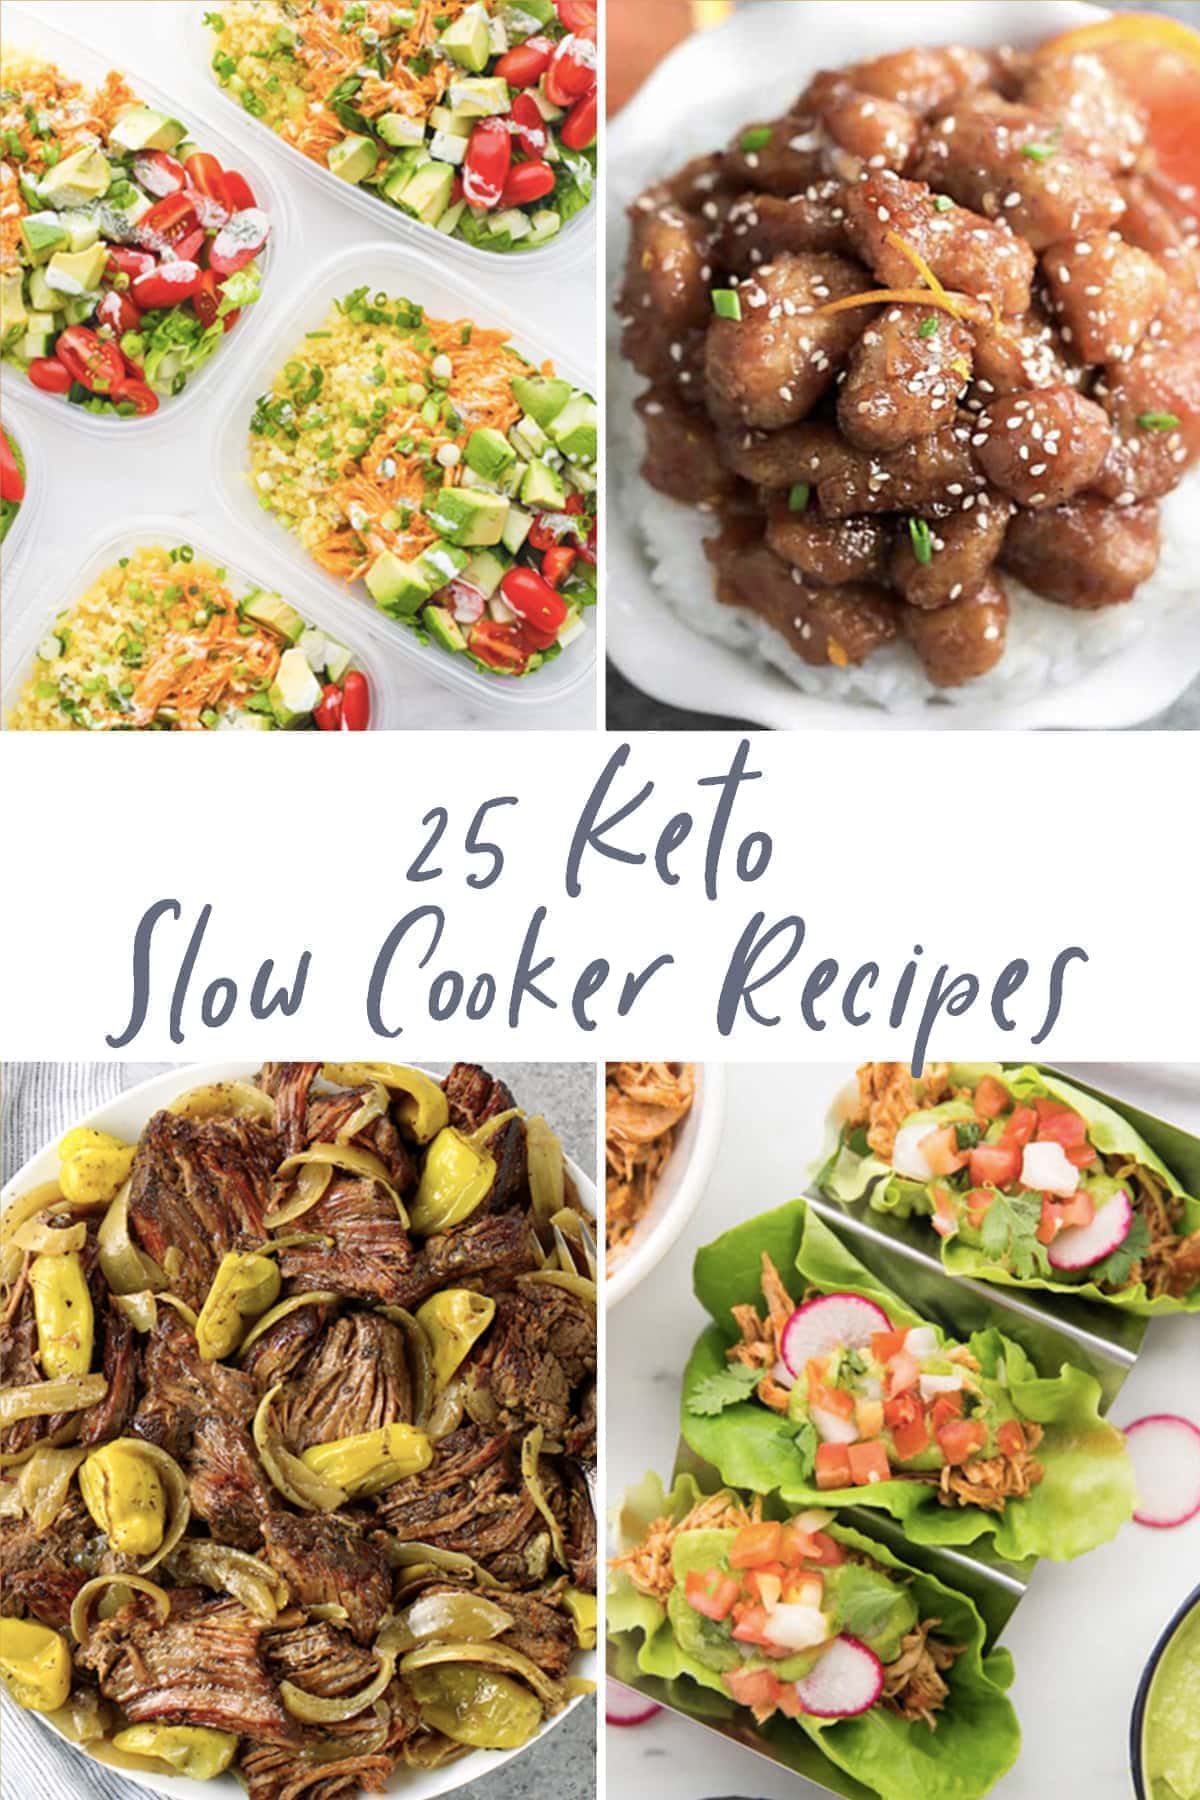 https://40aprons.com/wp-content/uploads/2021/01/25-keto-slow-cooker-recipes.jpg